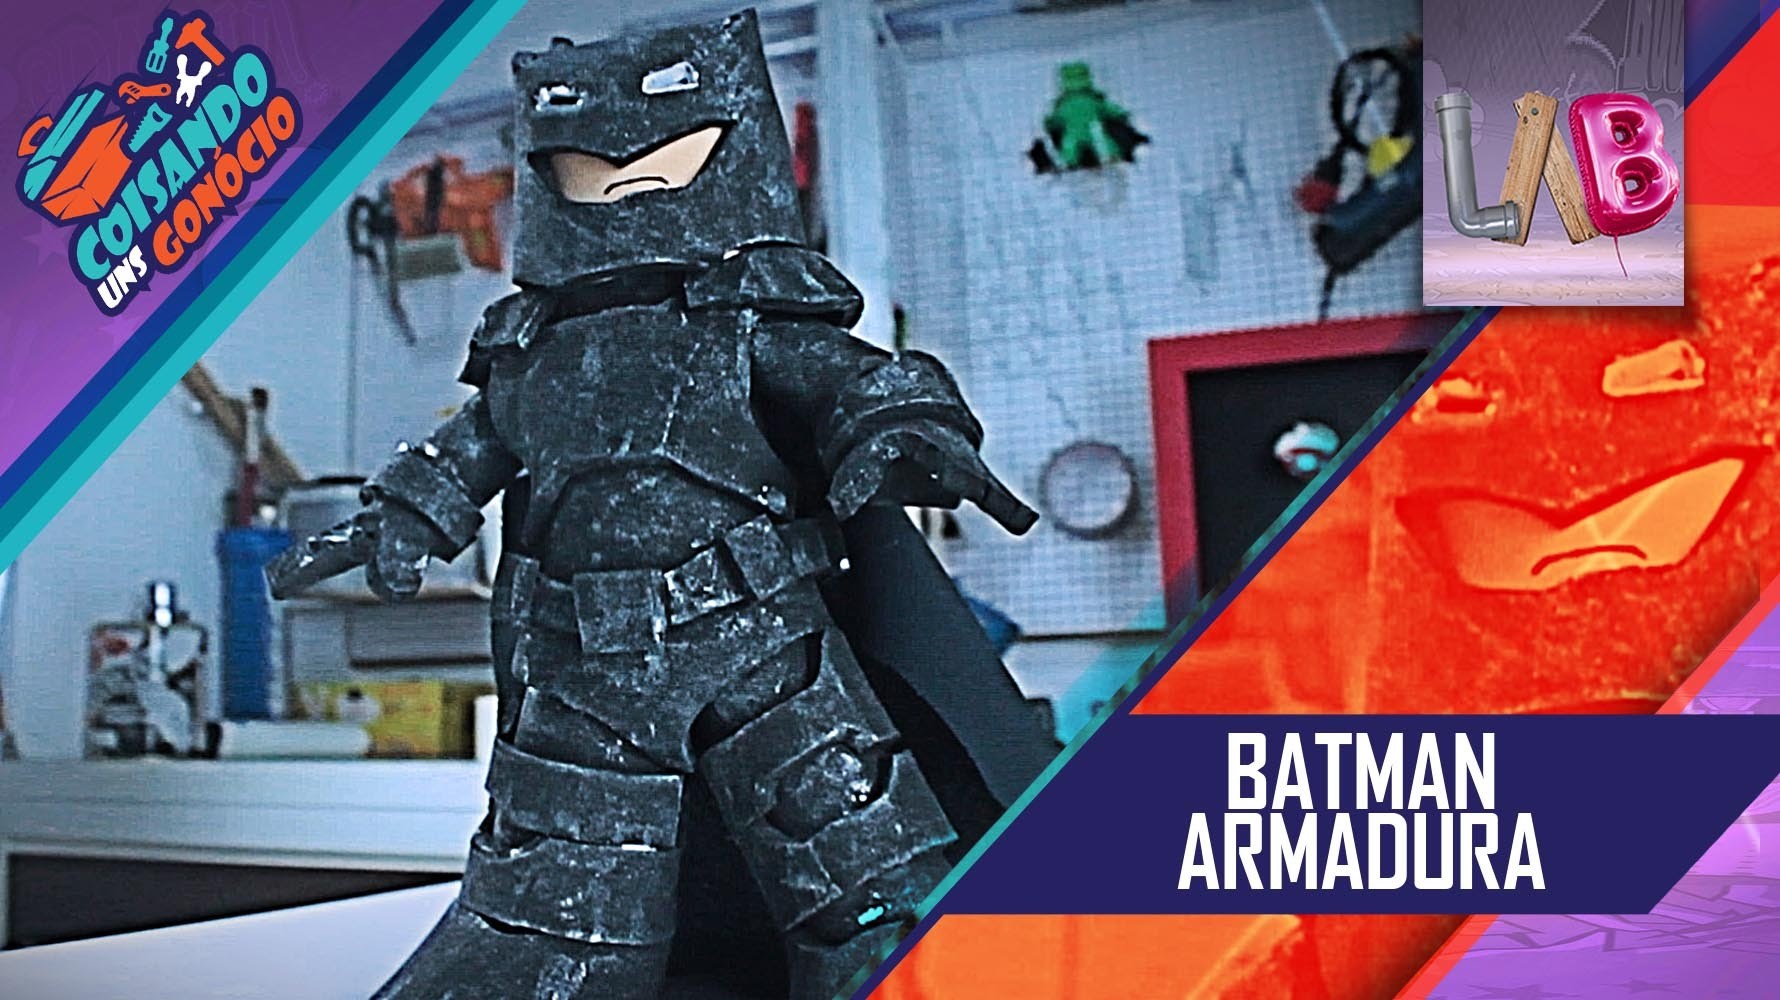 DIY: Batman Armadura - CUG# 18